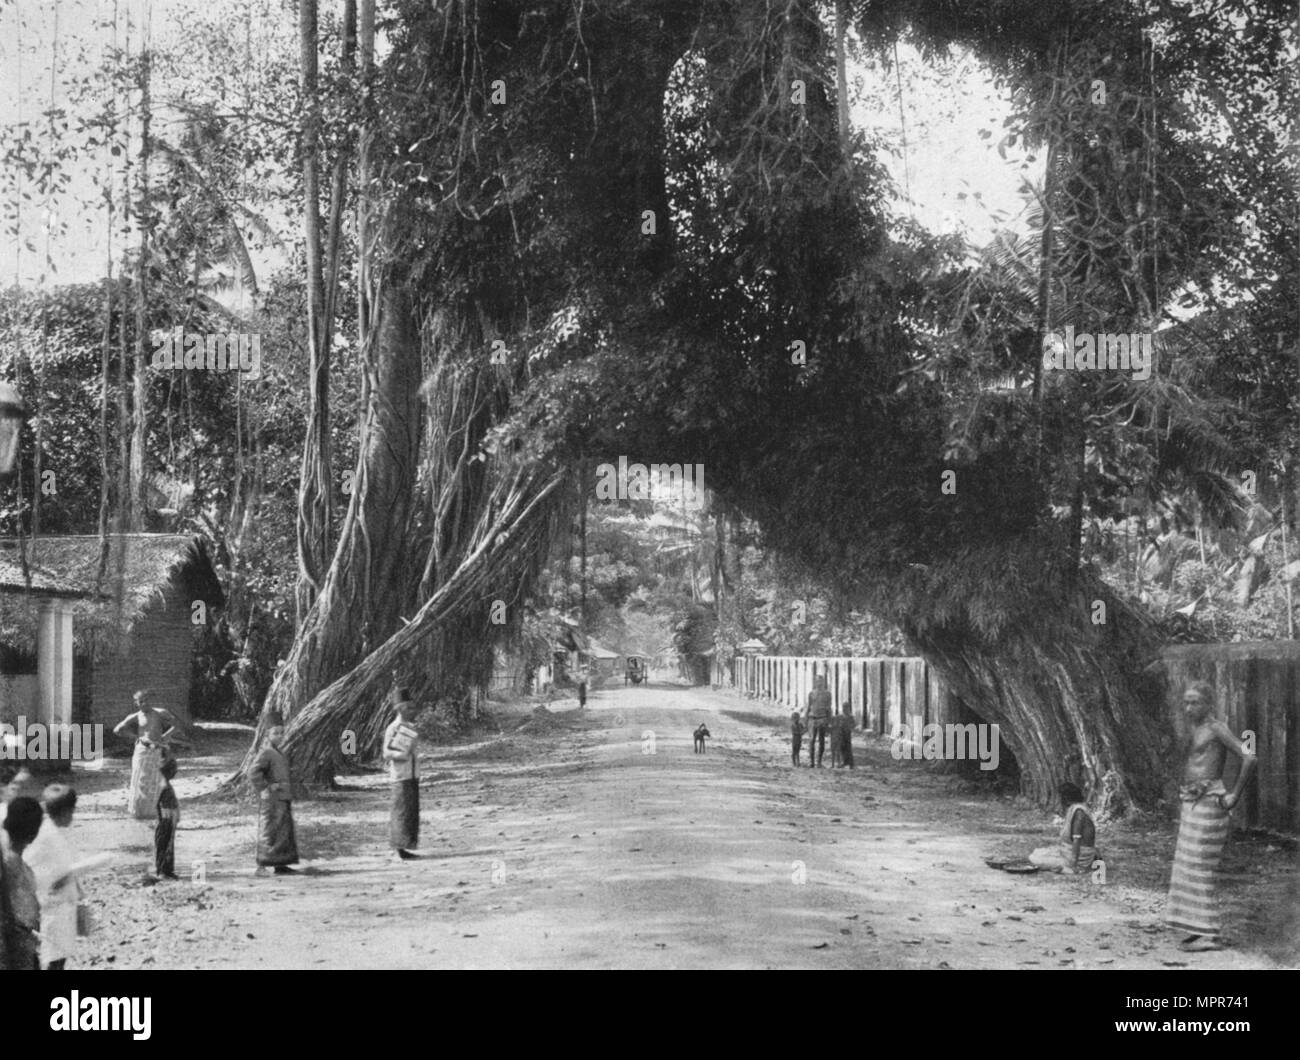 Bin alerischer alter baum Feigen (Ficus indica) an der Straße Clombo-Galle bei Kalutara', 1926. Artist: Unbekannt. Stockfoto